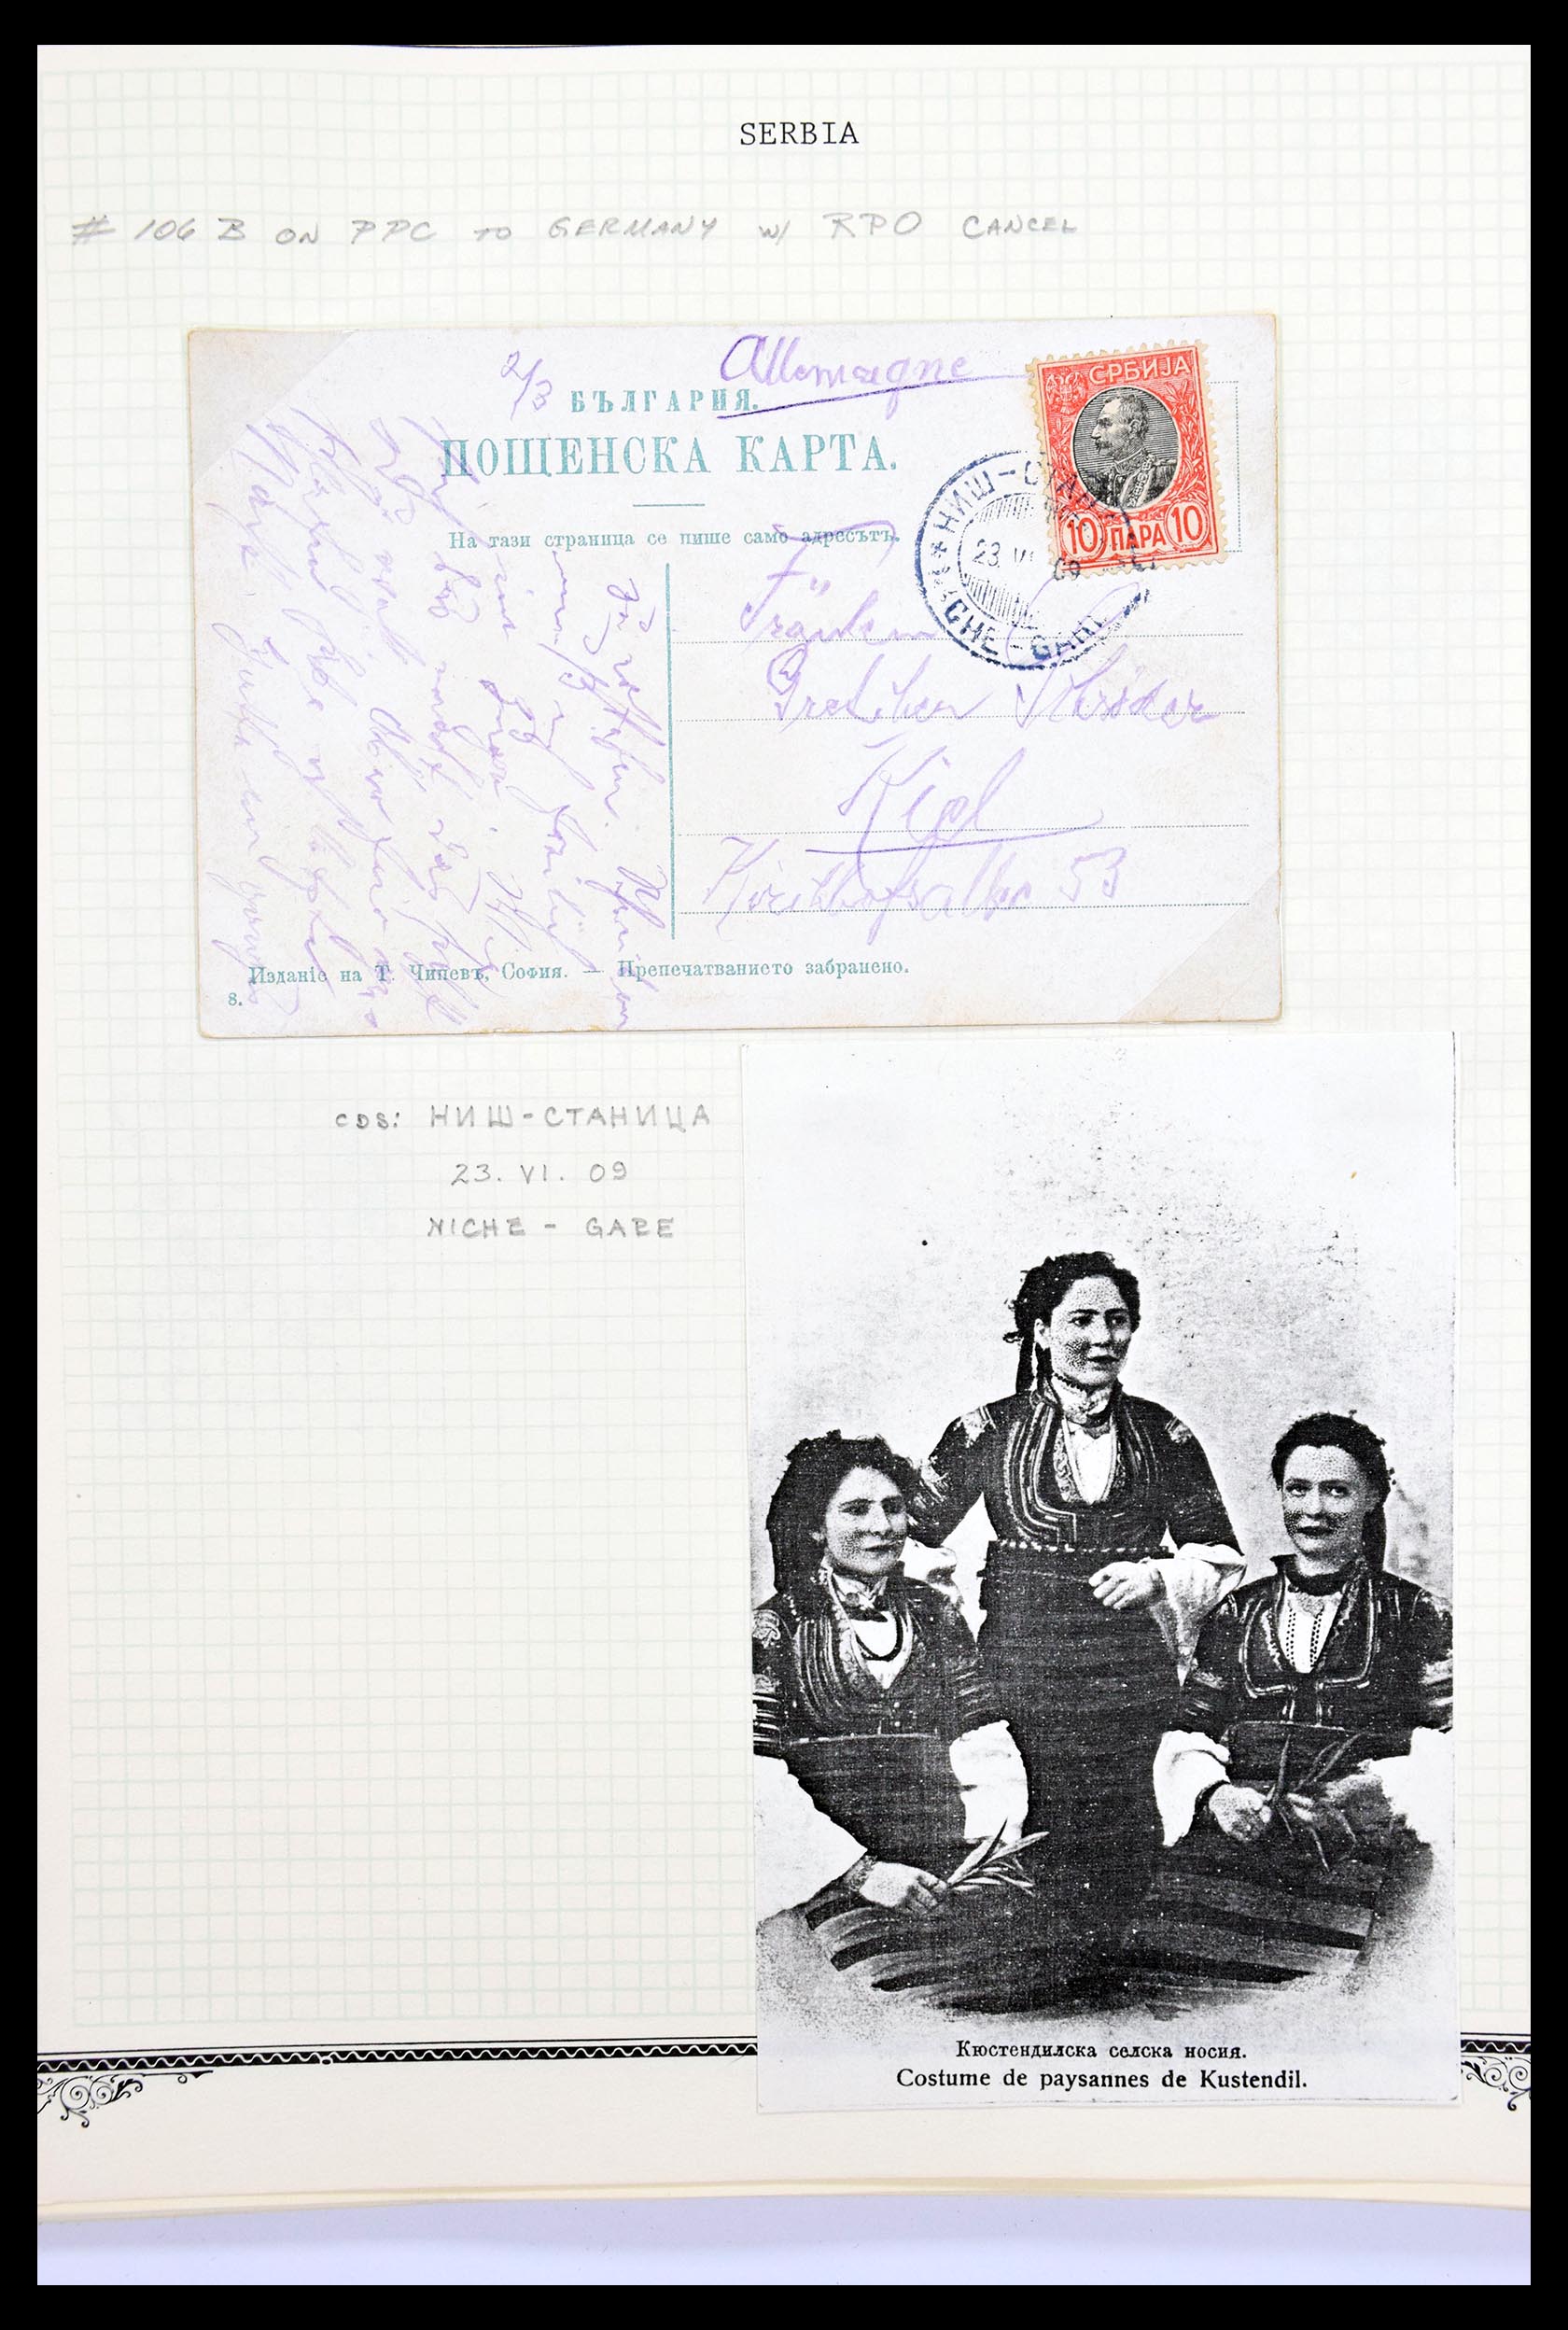 30281 089 - 30281 Serbia specialised 1880-1921.